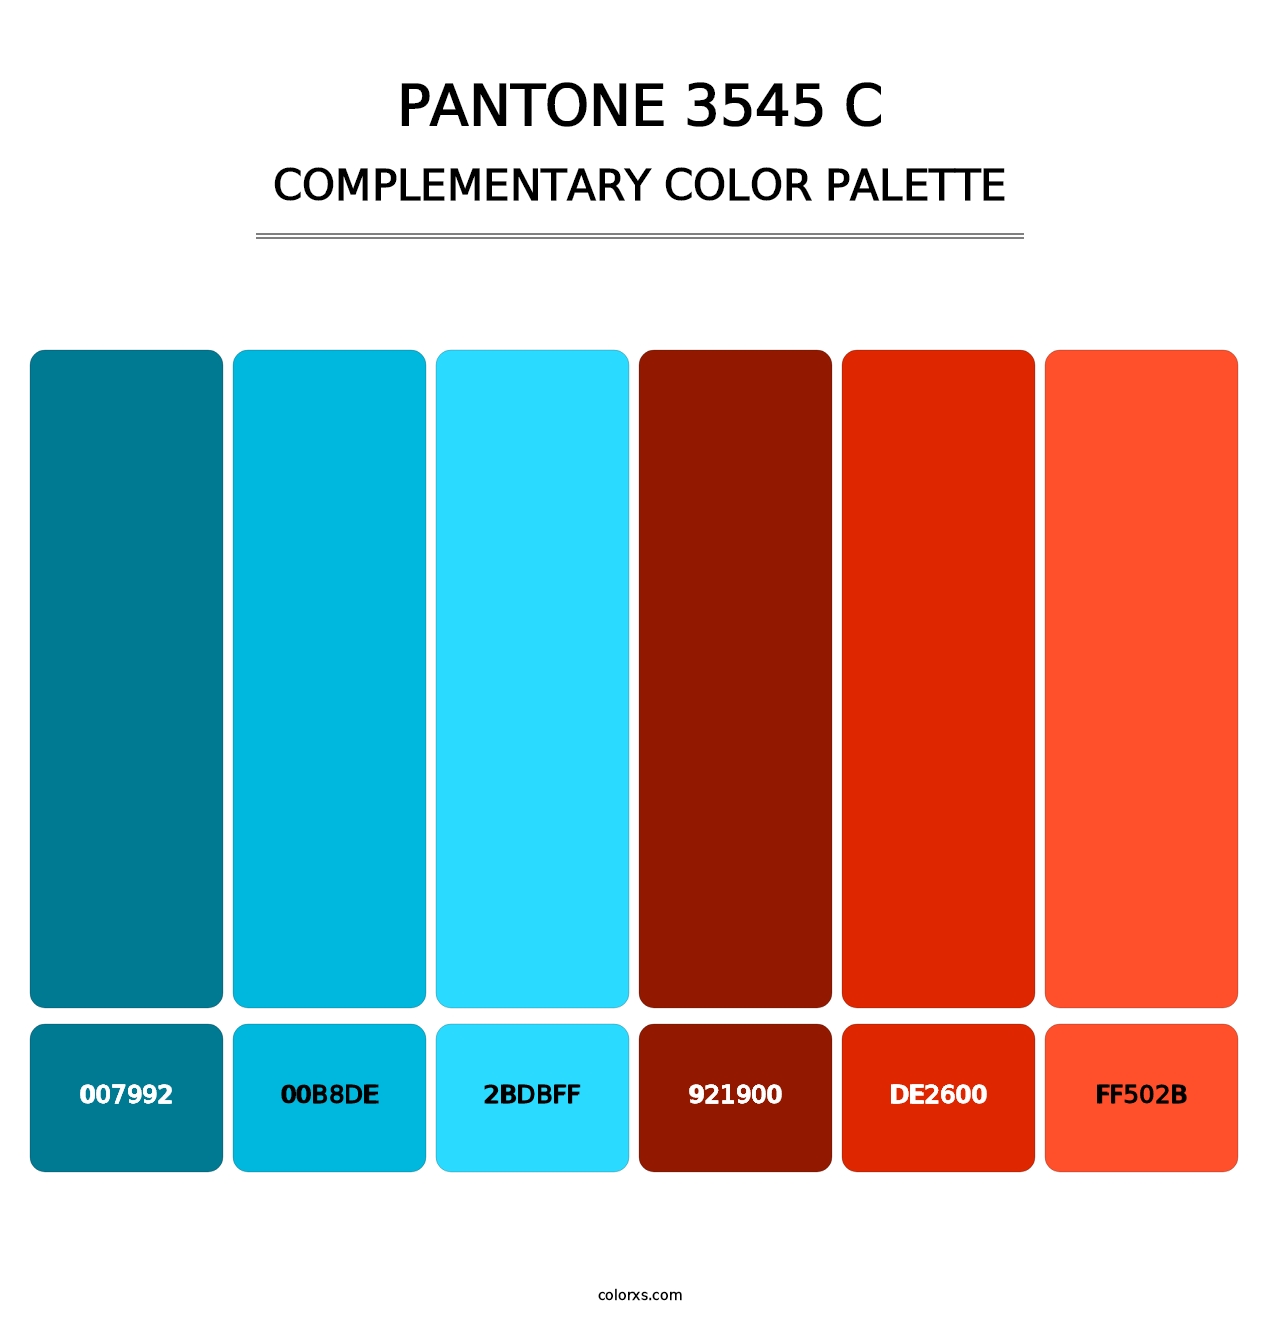 PANTONE 3545 C - Complementary Color Palette